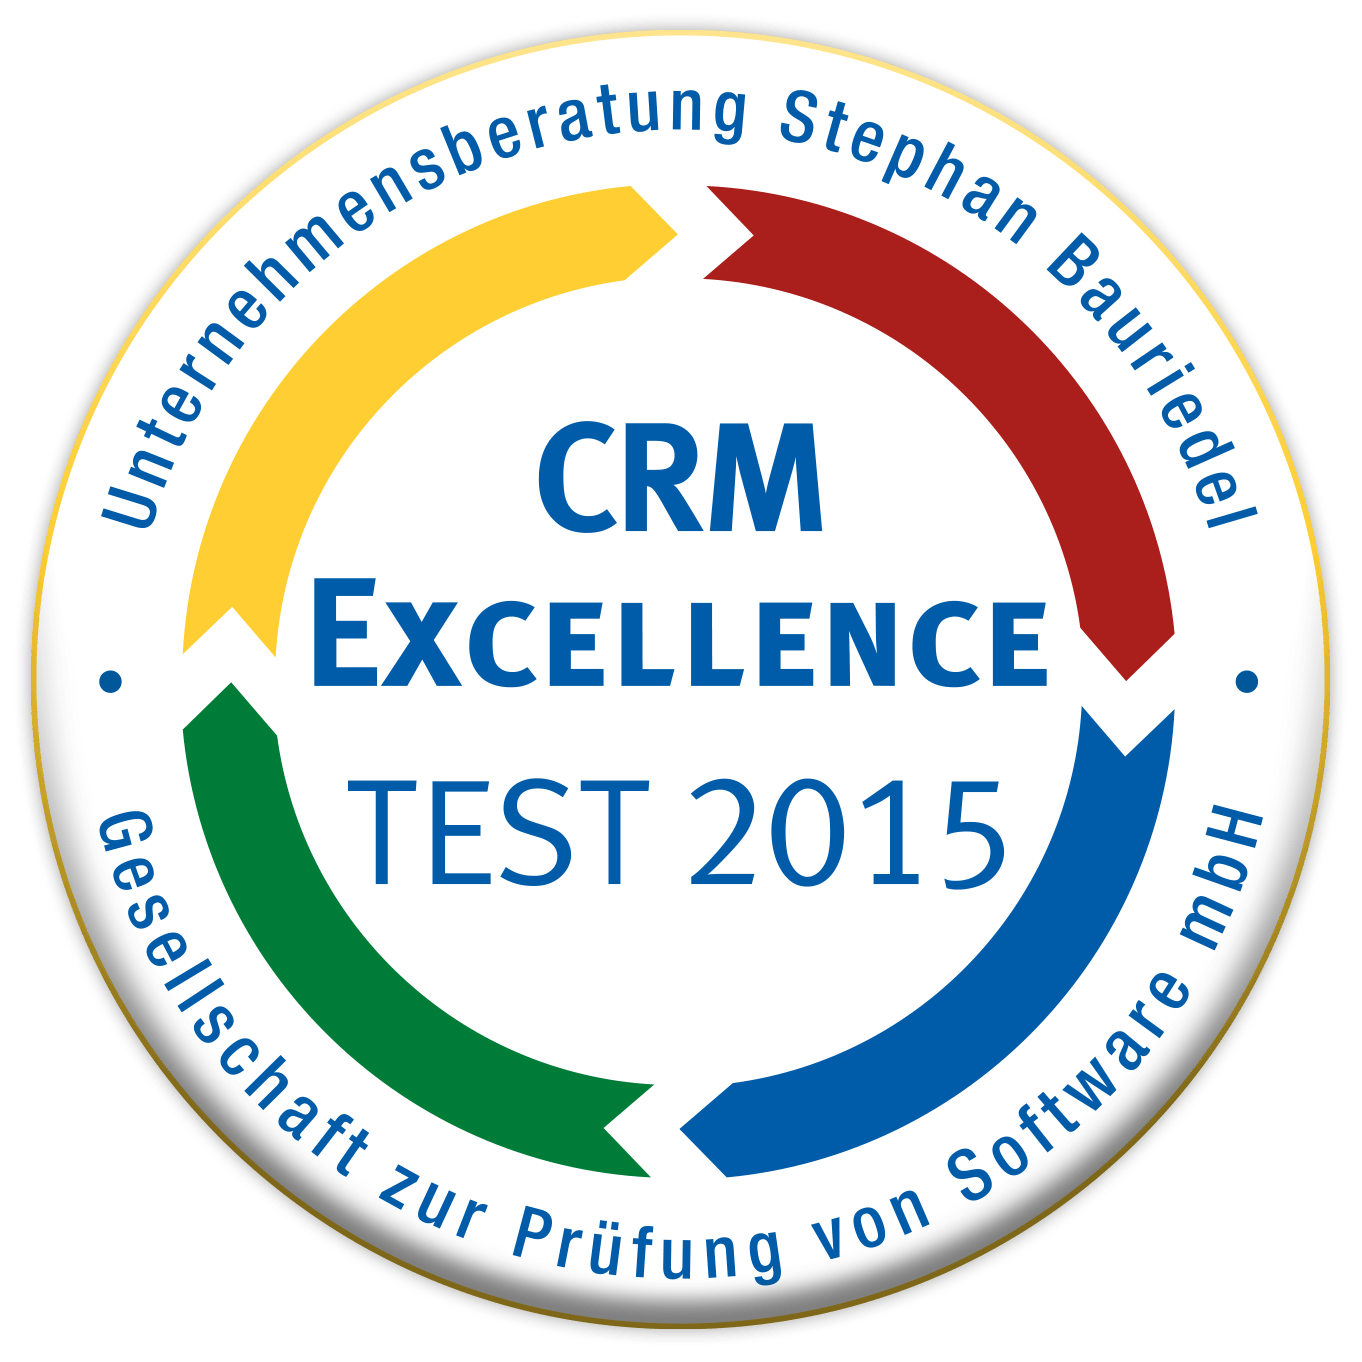 CRM Excellence Test 2015 - midcom GmbH